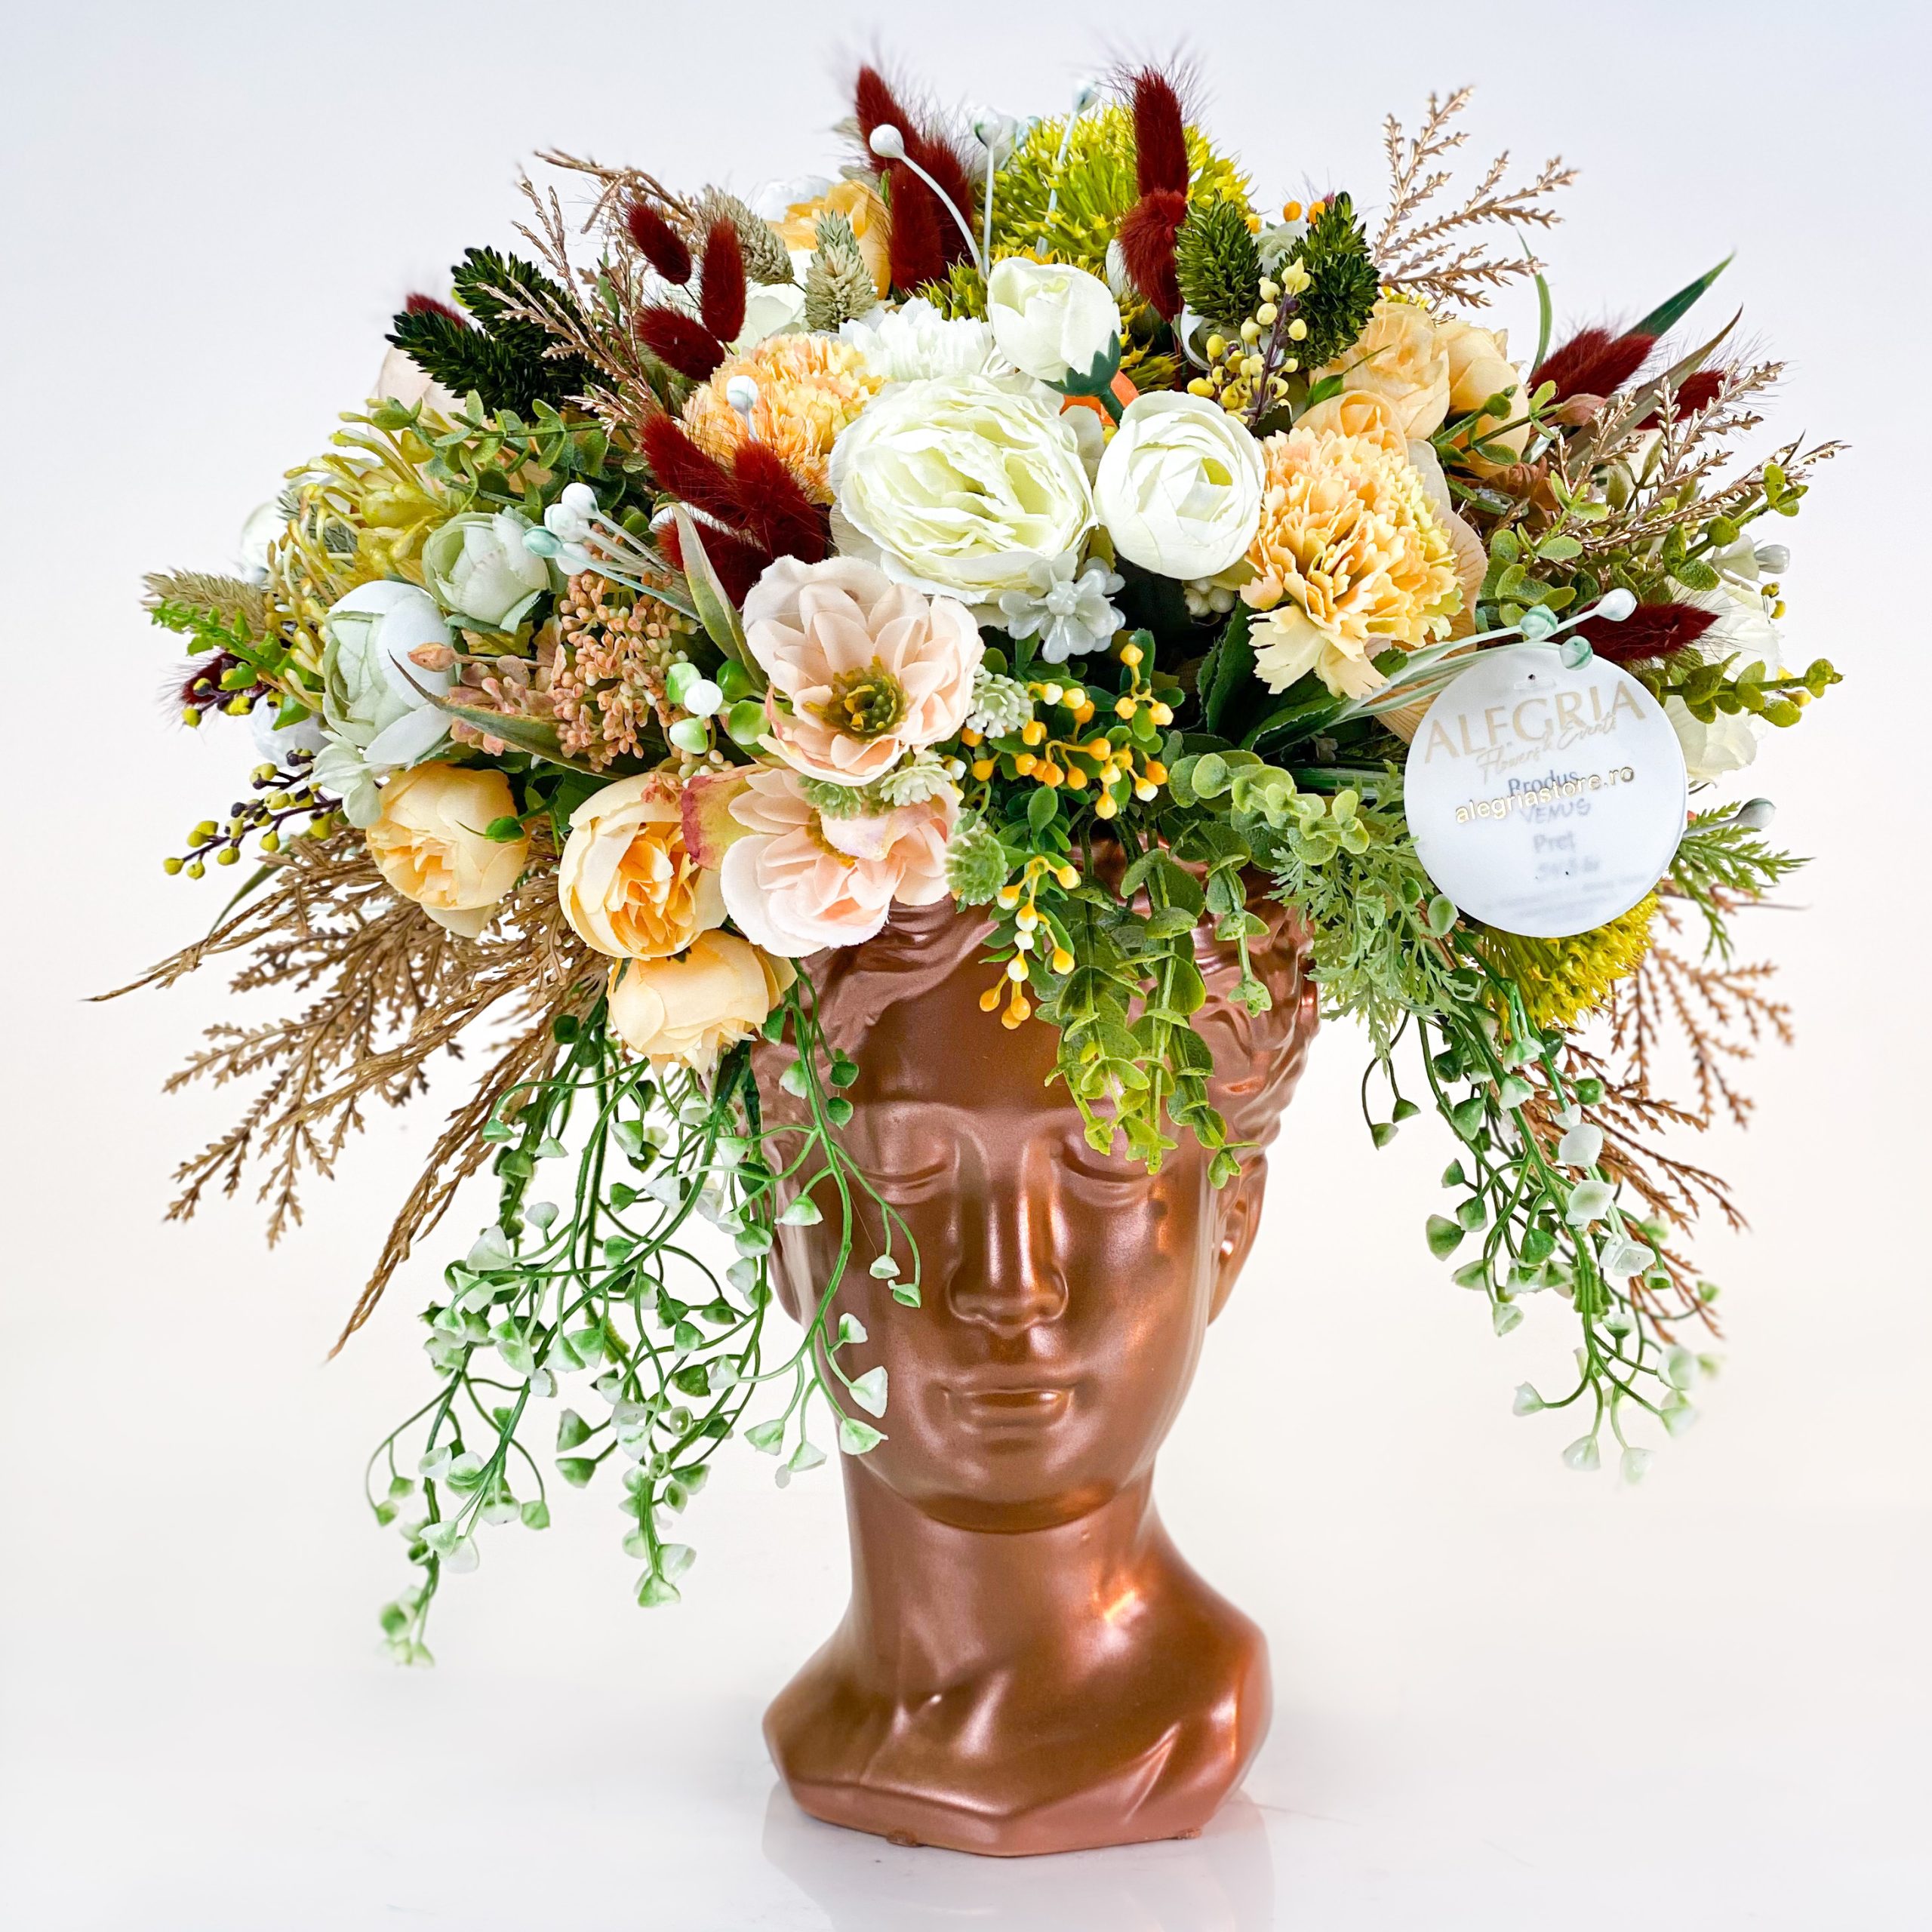 Cadou floral VENUS aranjament cu flori uscate si artificiale Italy theme in galben oranj si castaniu 1 scaled